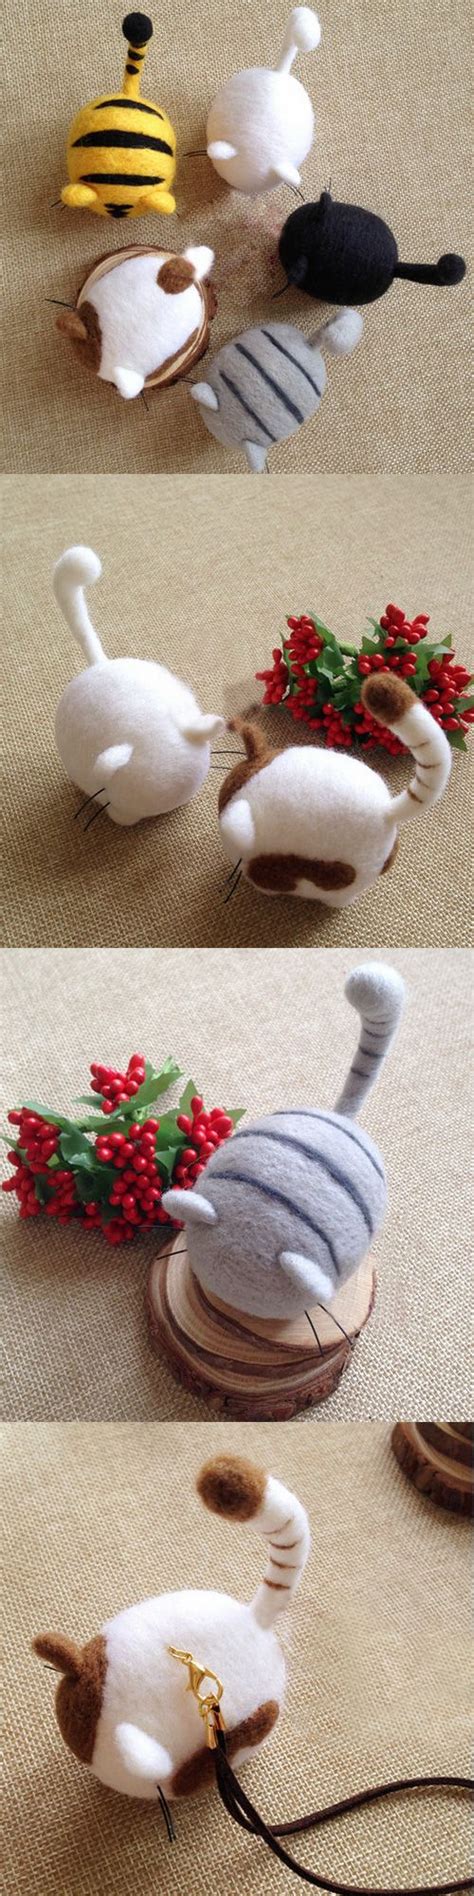 Handmade Needle Felted Felting Cute Animal Project Cat Kitten Doll Toy